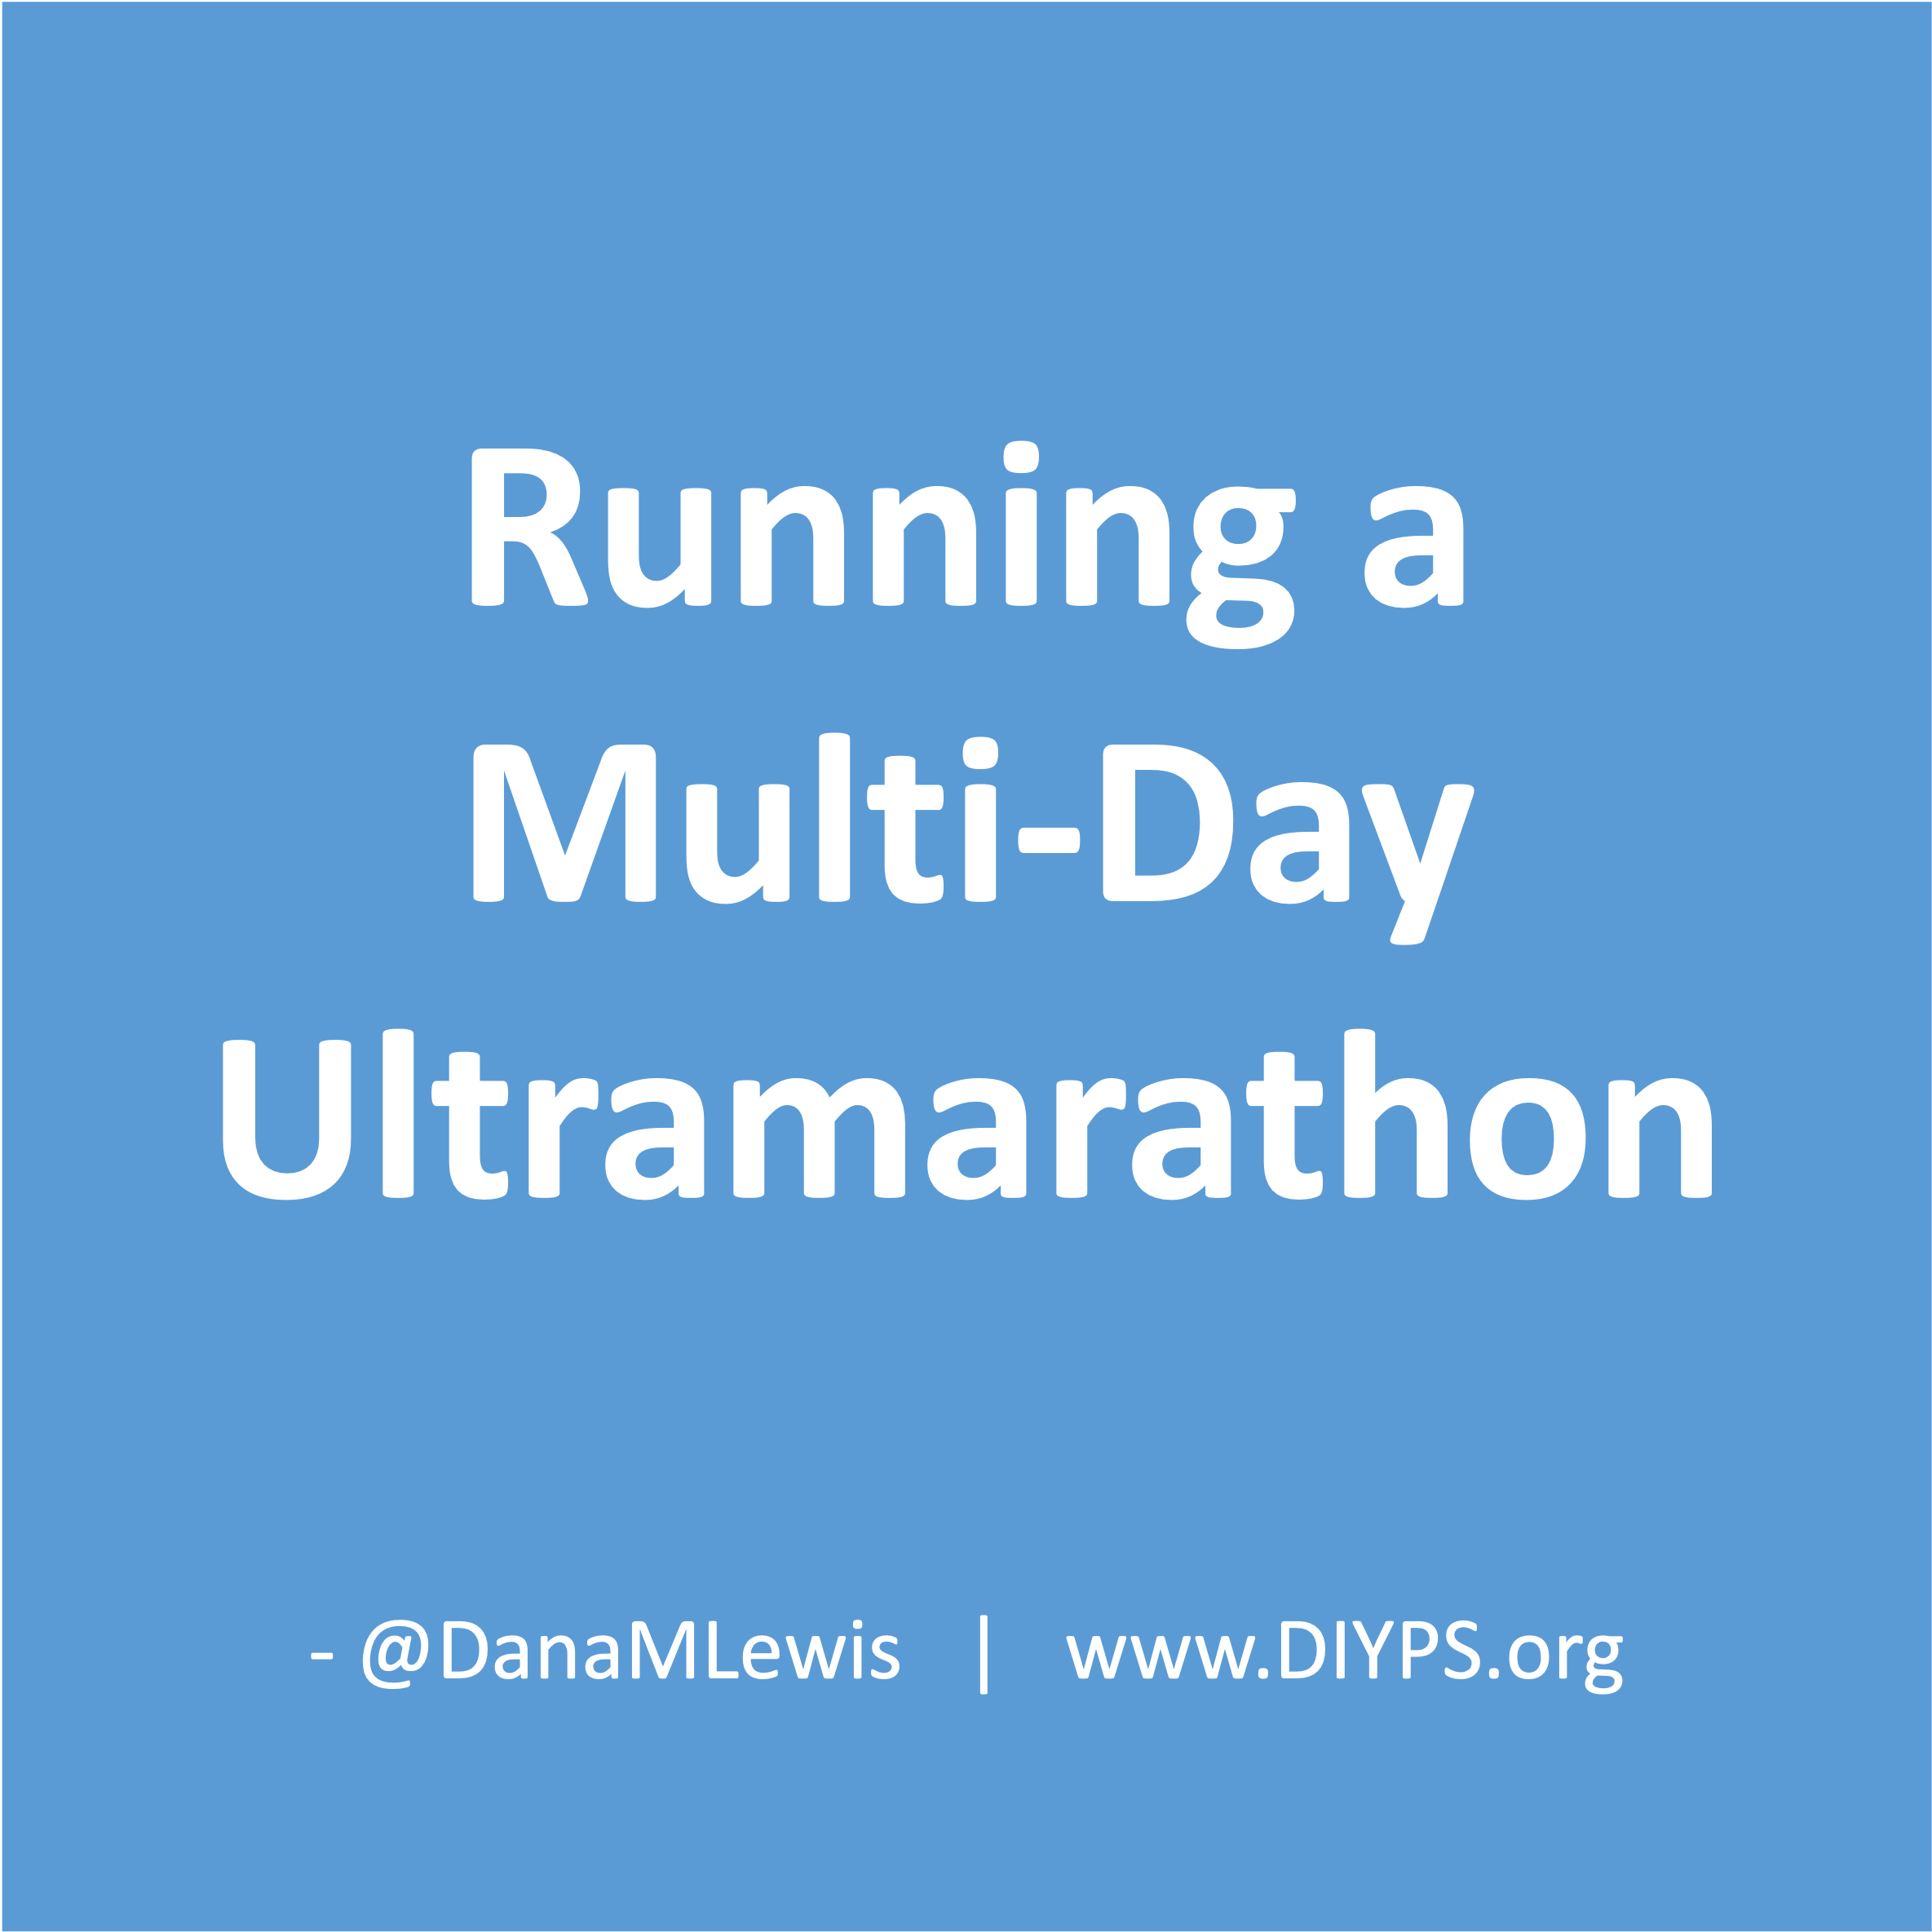 Running a multi-day ultramarathon by Dana M. Lewis from DIYPS.org